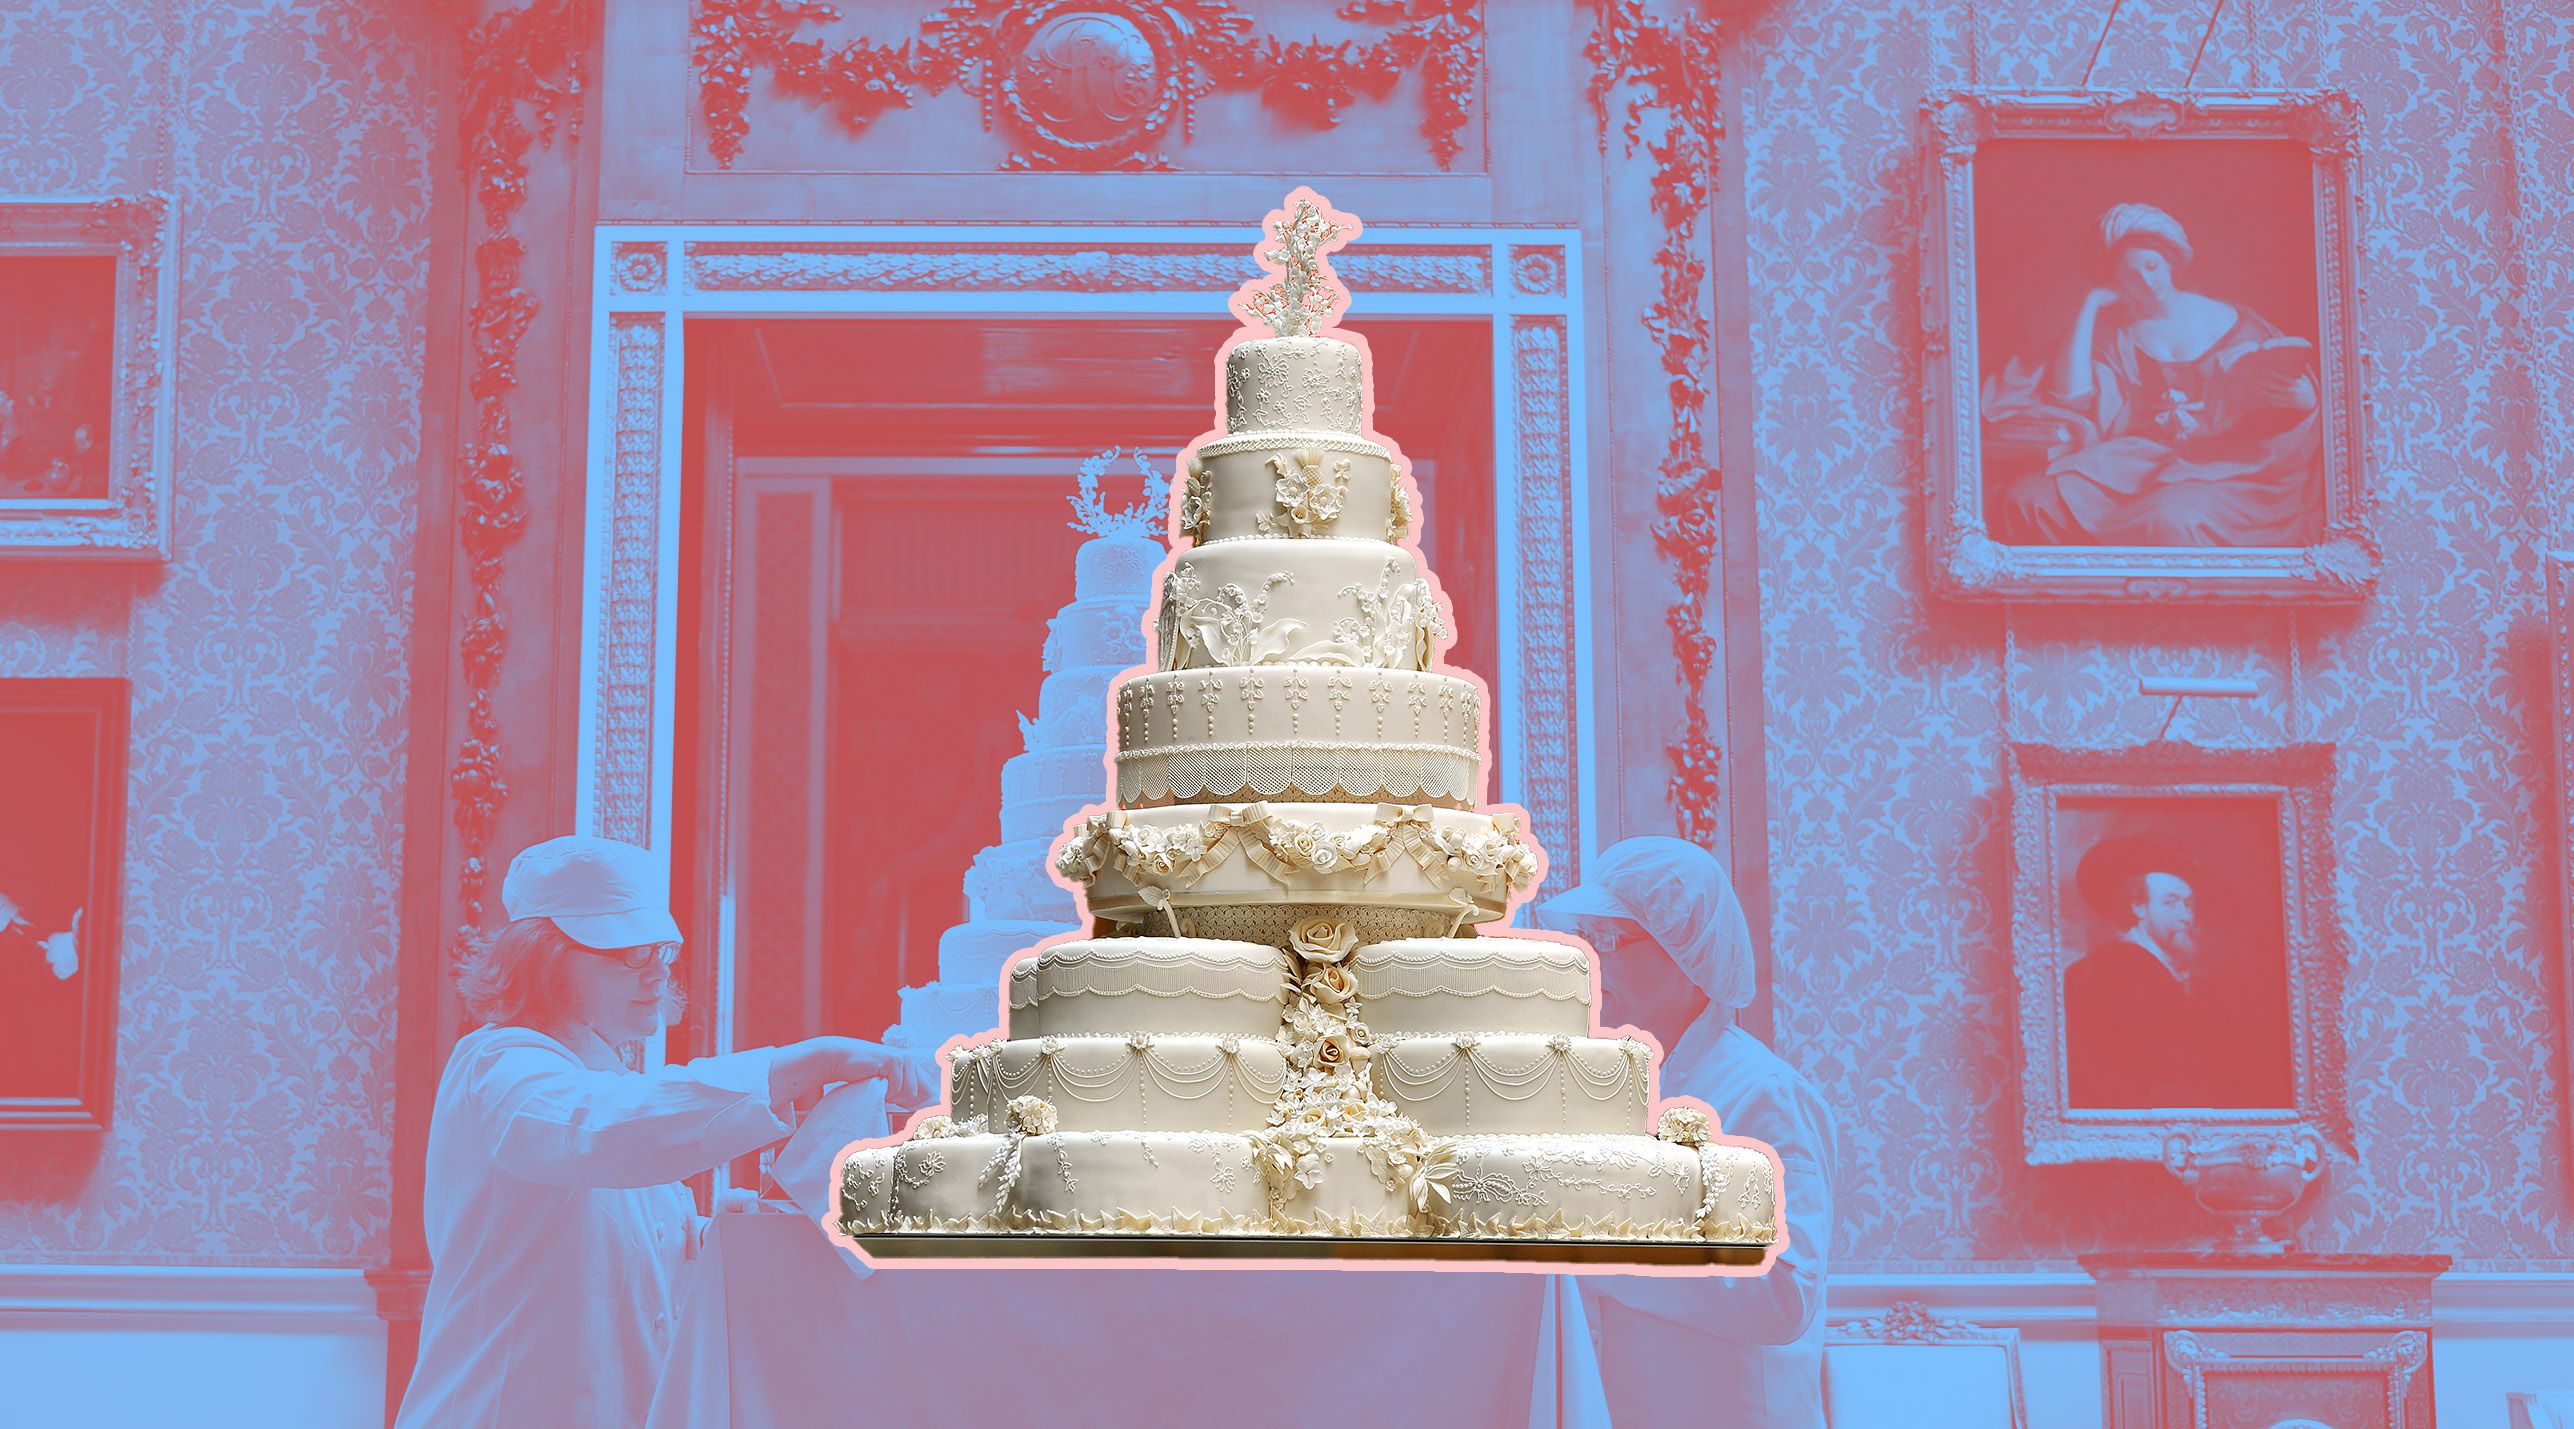 Aggregate 75+ princess diana wedding cake best - awesomeenglish.edu.vn